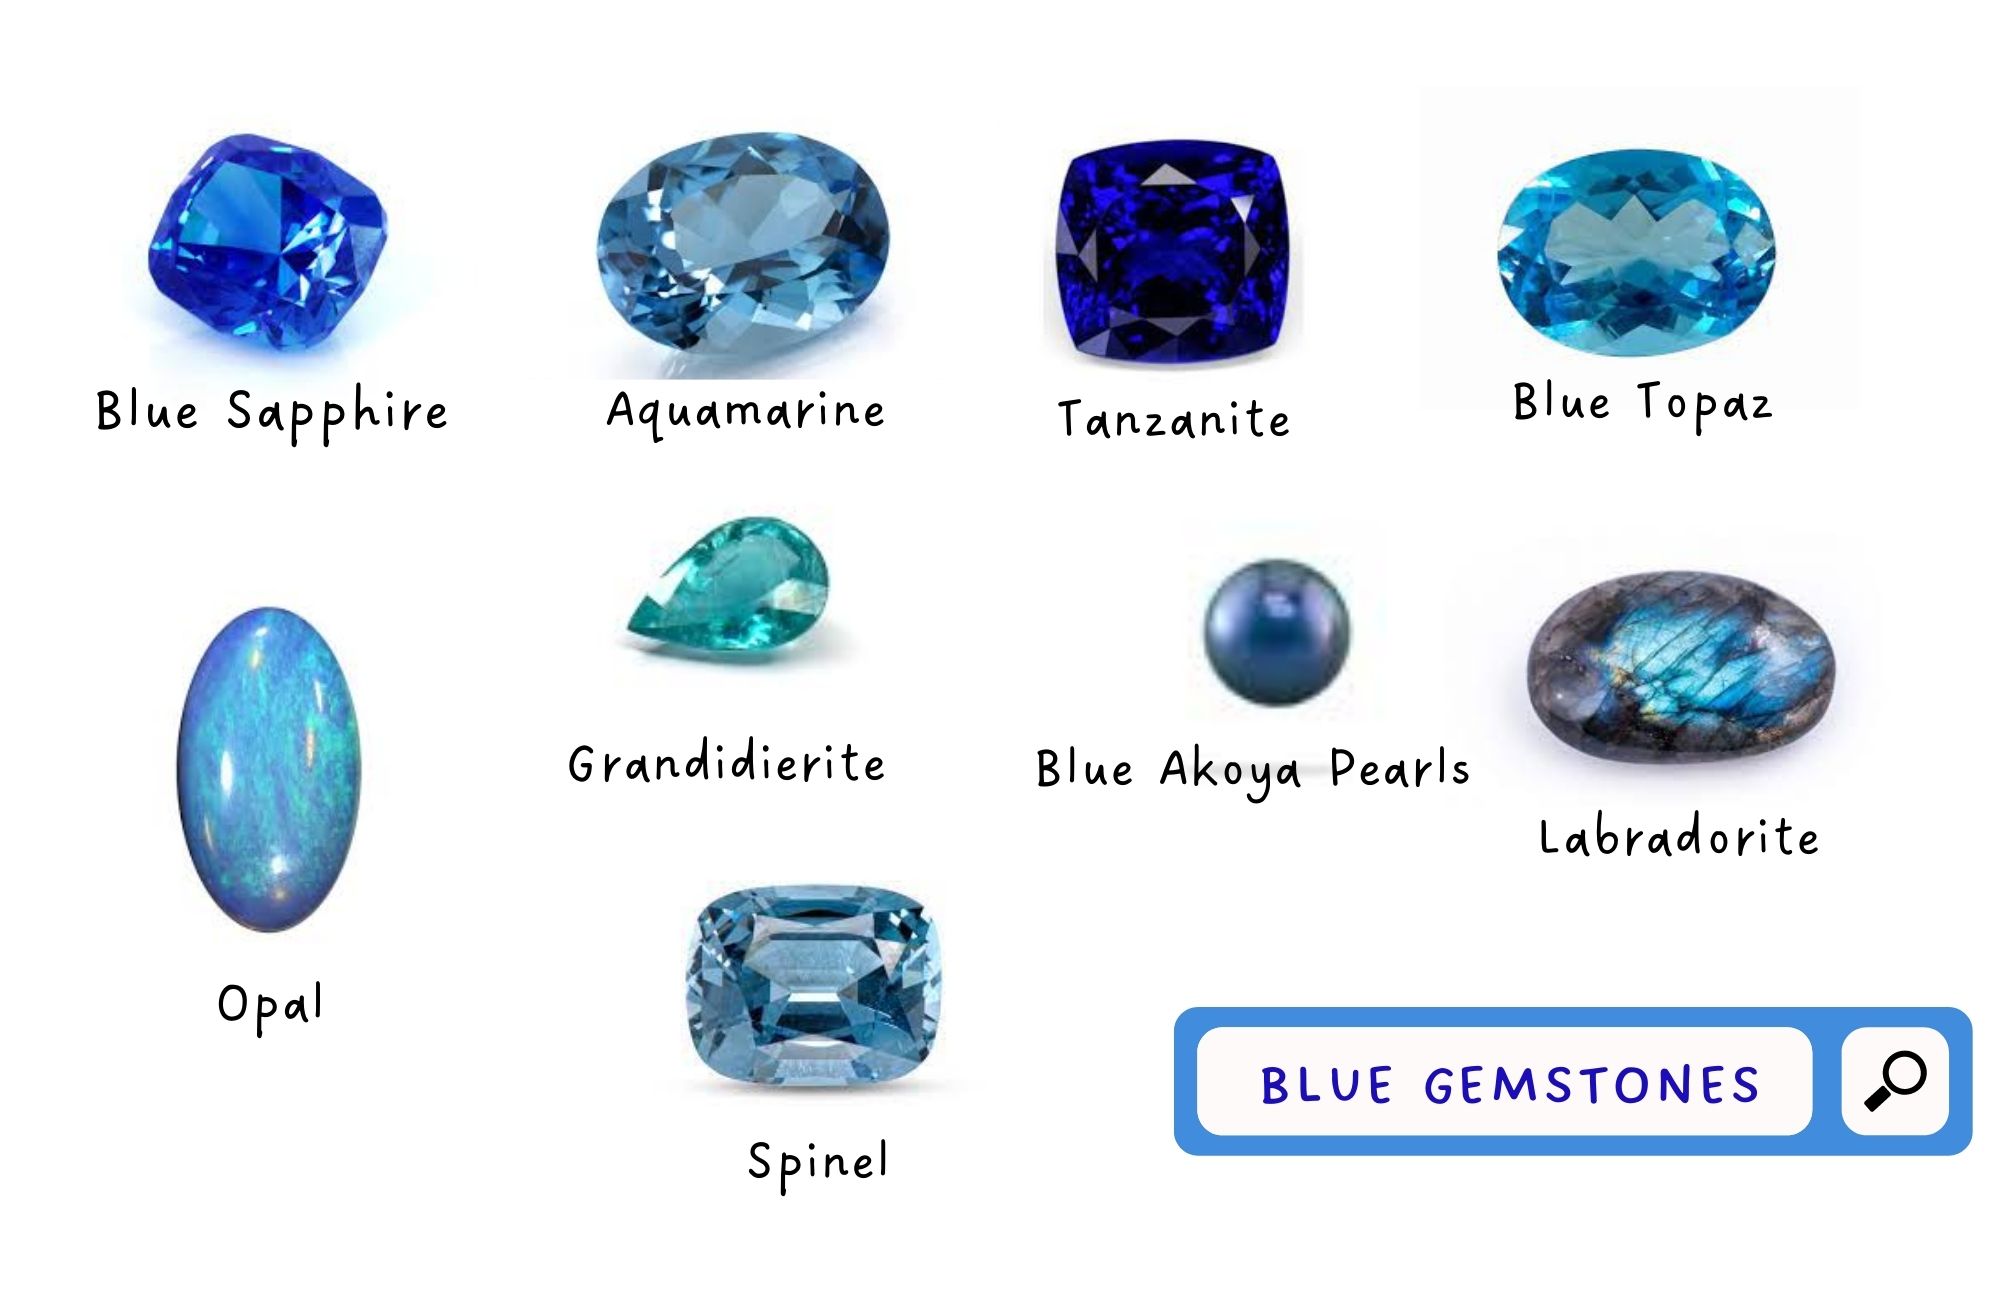 Nine different types of blue gemstones